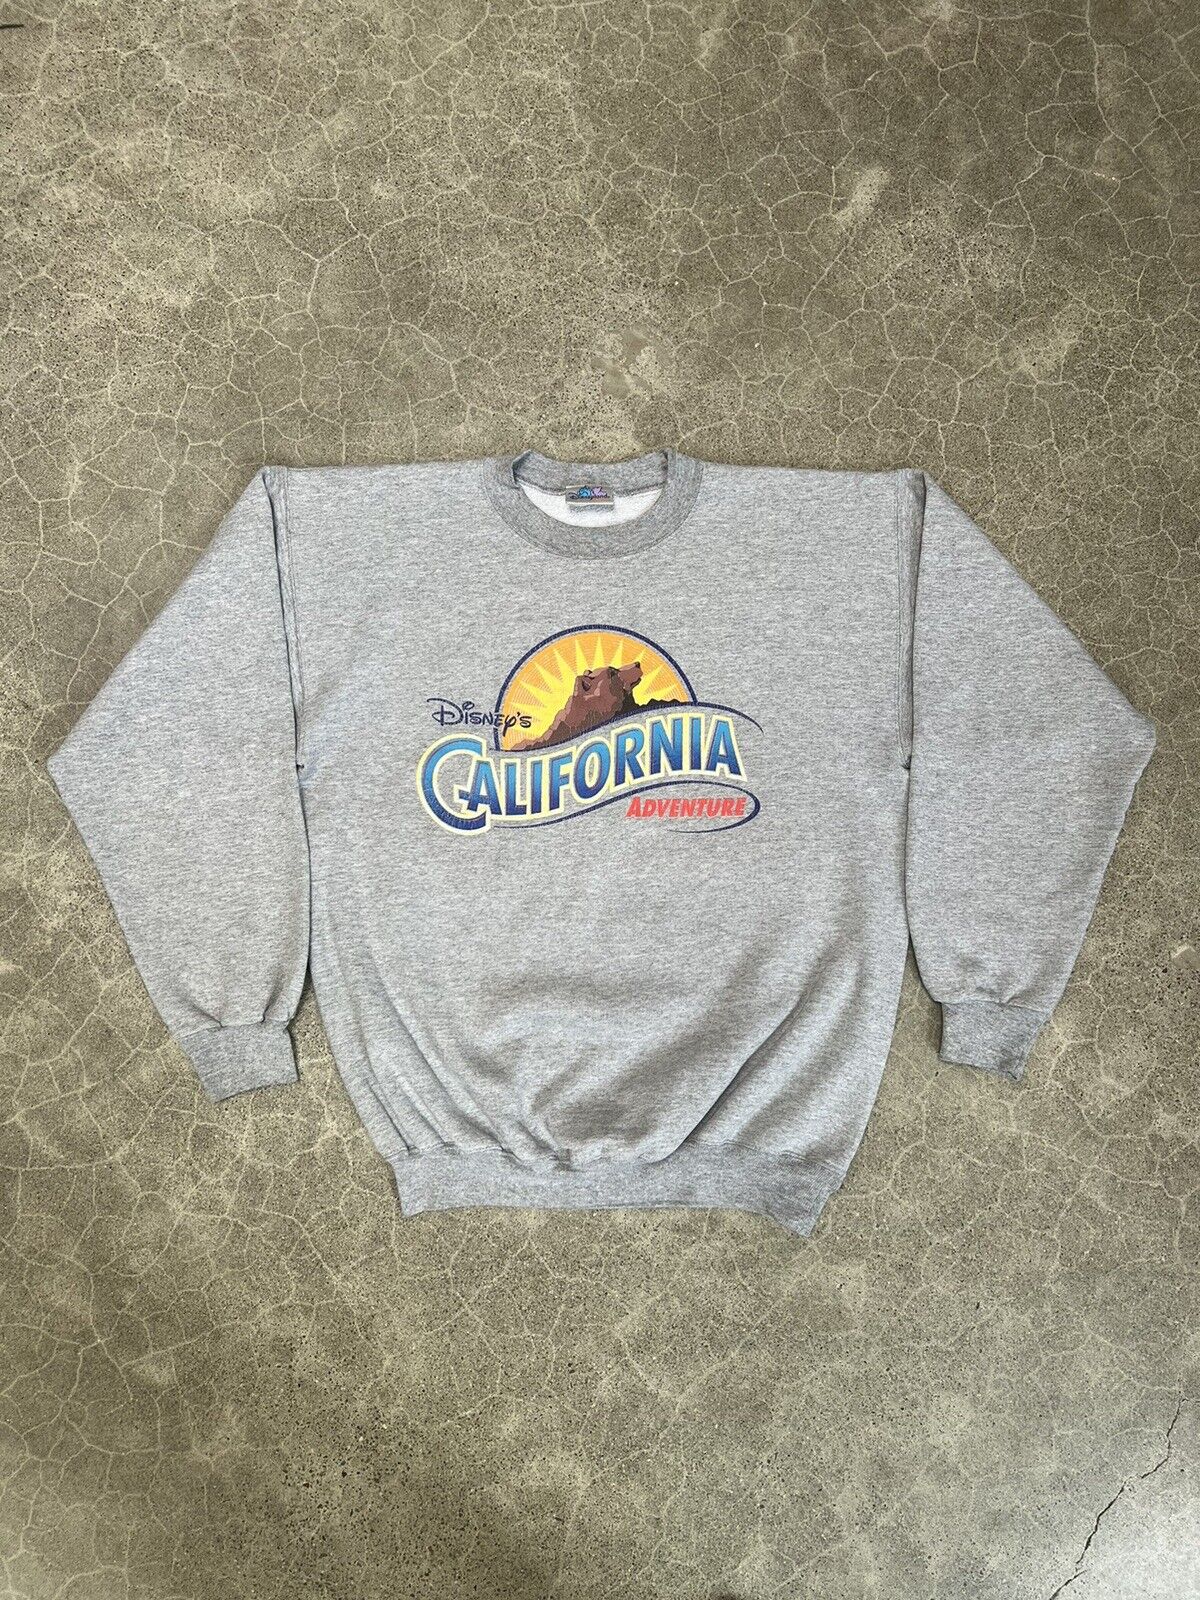 Vtg 2000s Disney California Adventure Disneyland Sweatshirt Gray 21.5x25.5